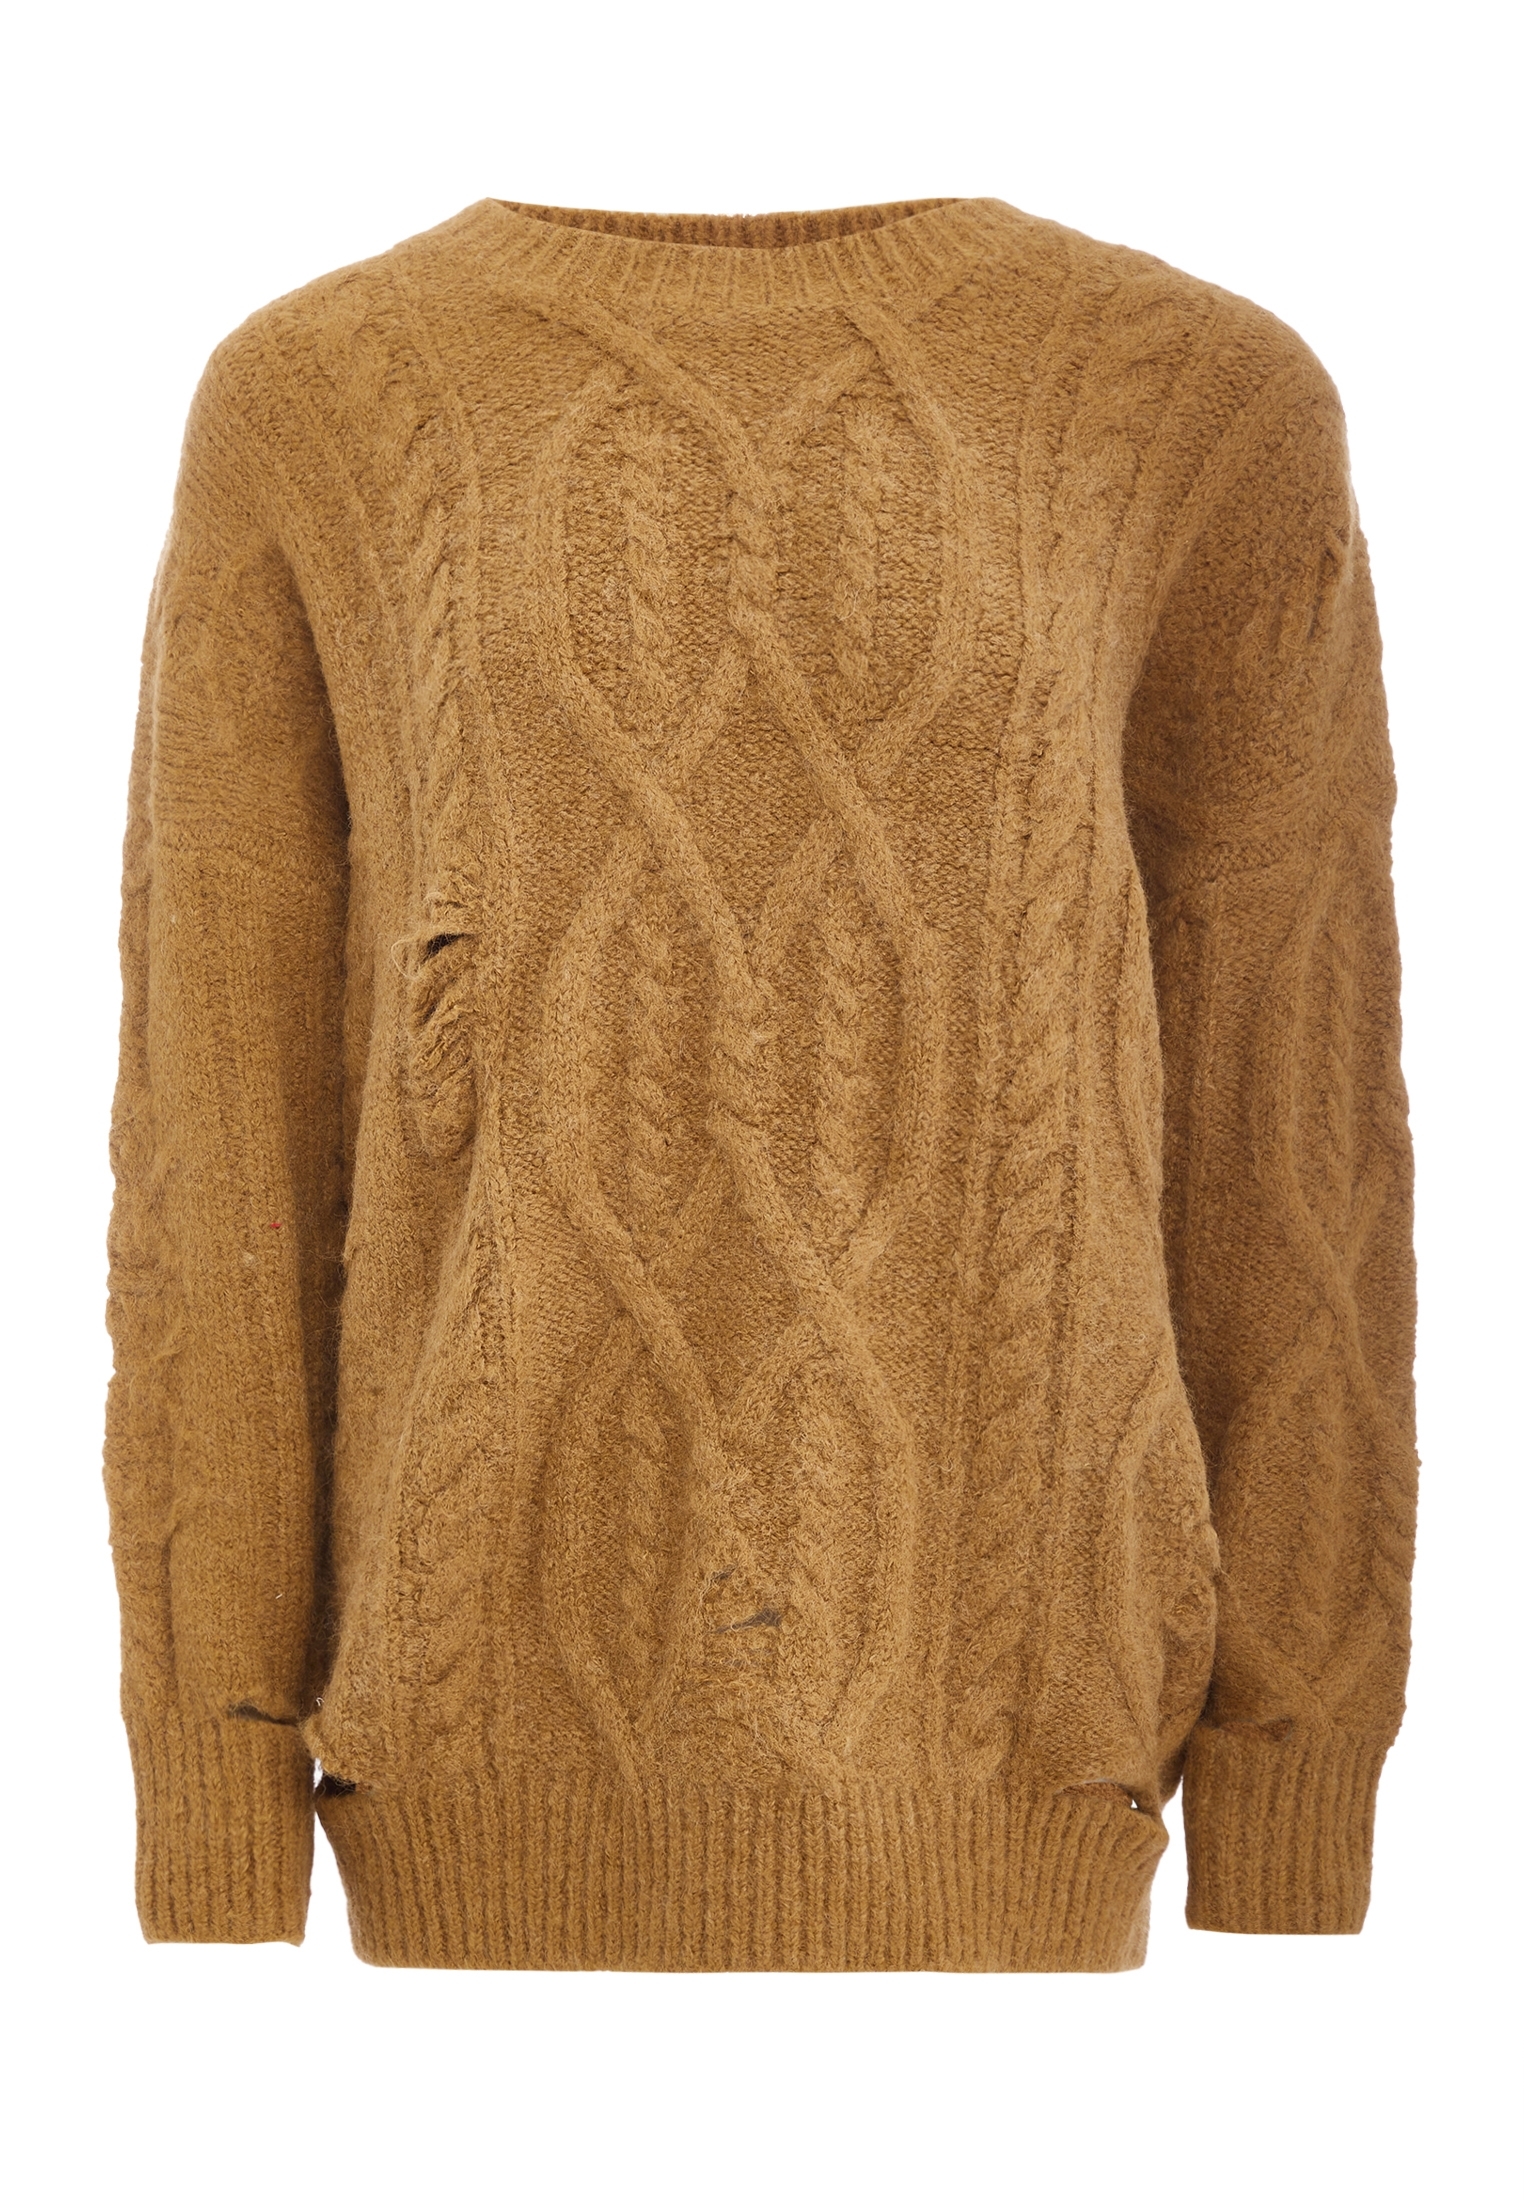 Свитер Tanuna Strick, светло-коричневый свитер tanuna strick цвет senf